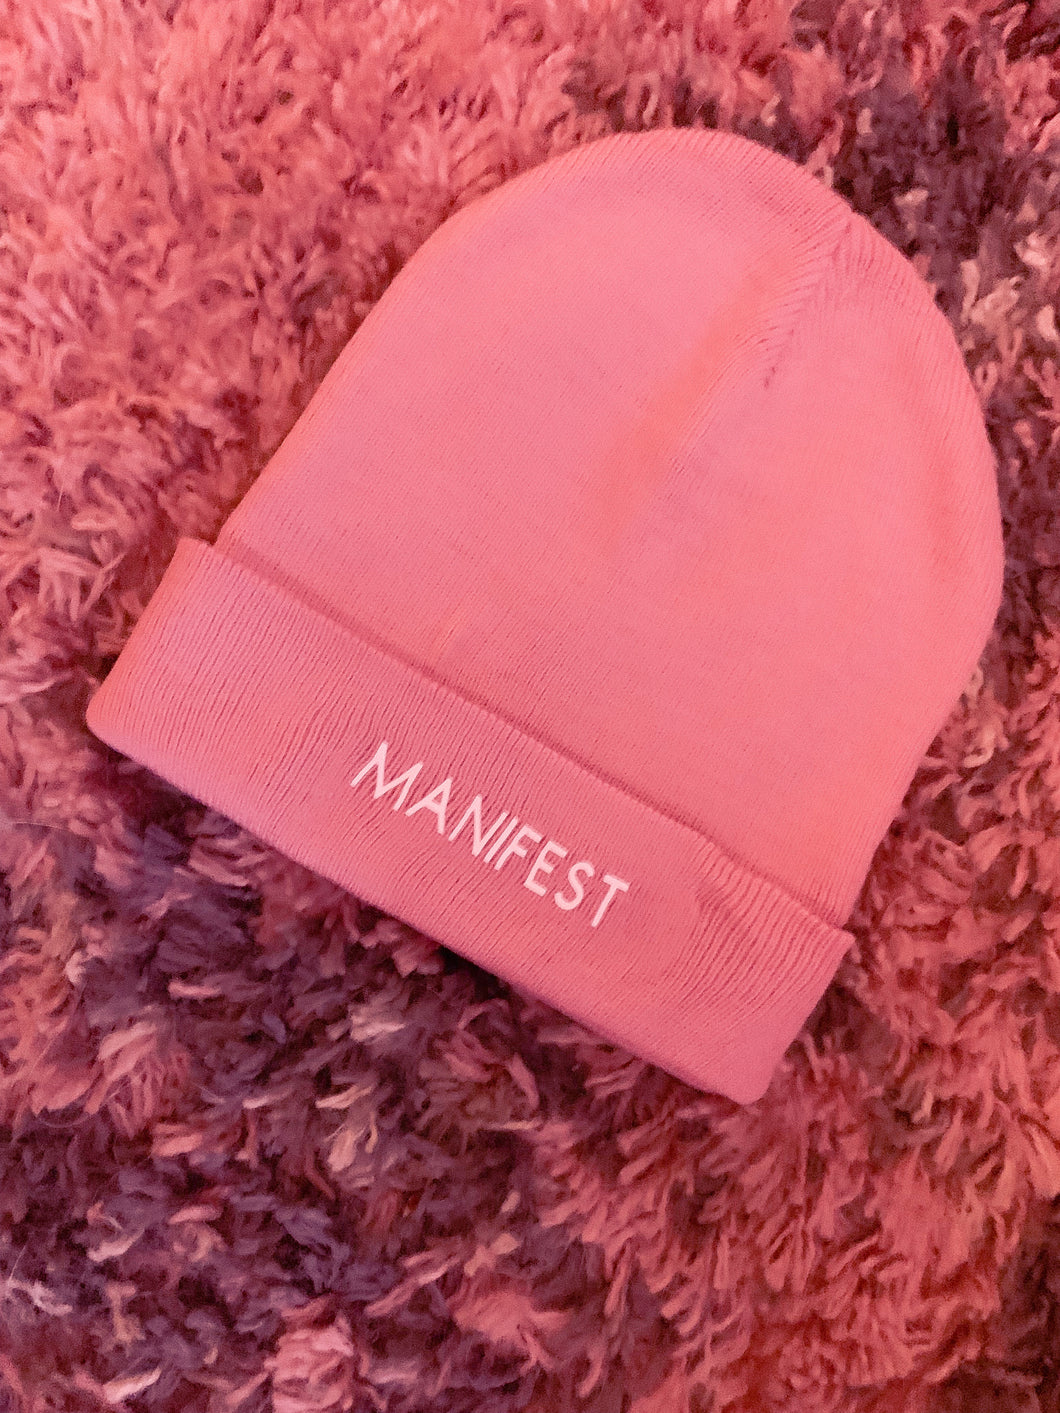 Manifest beaning hat